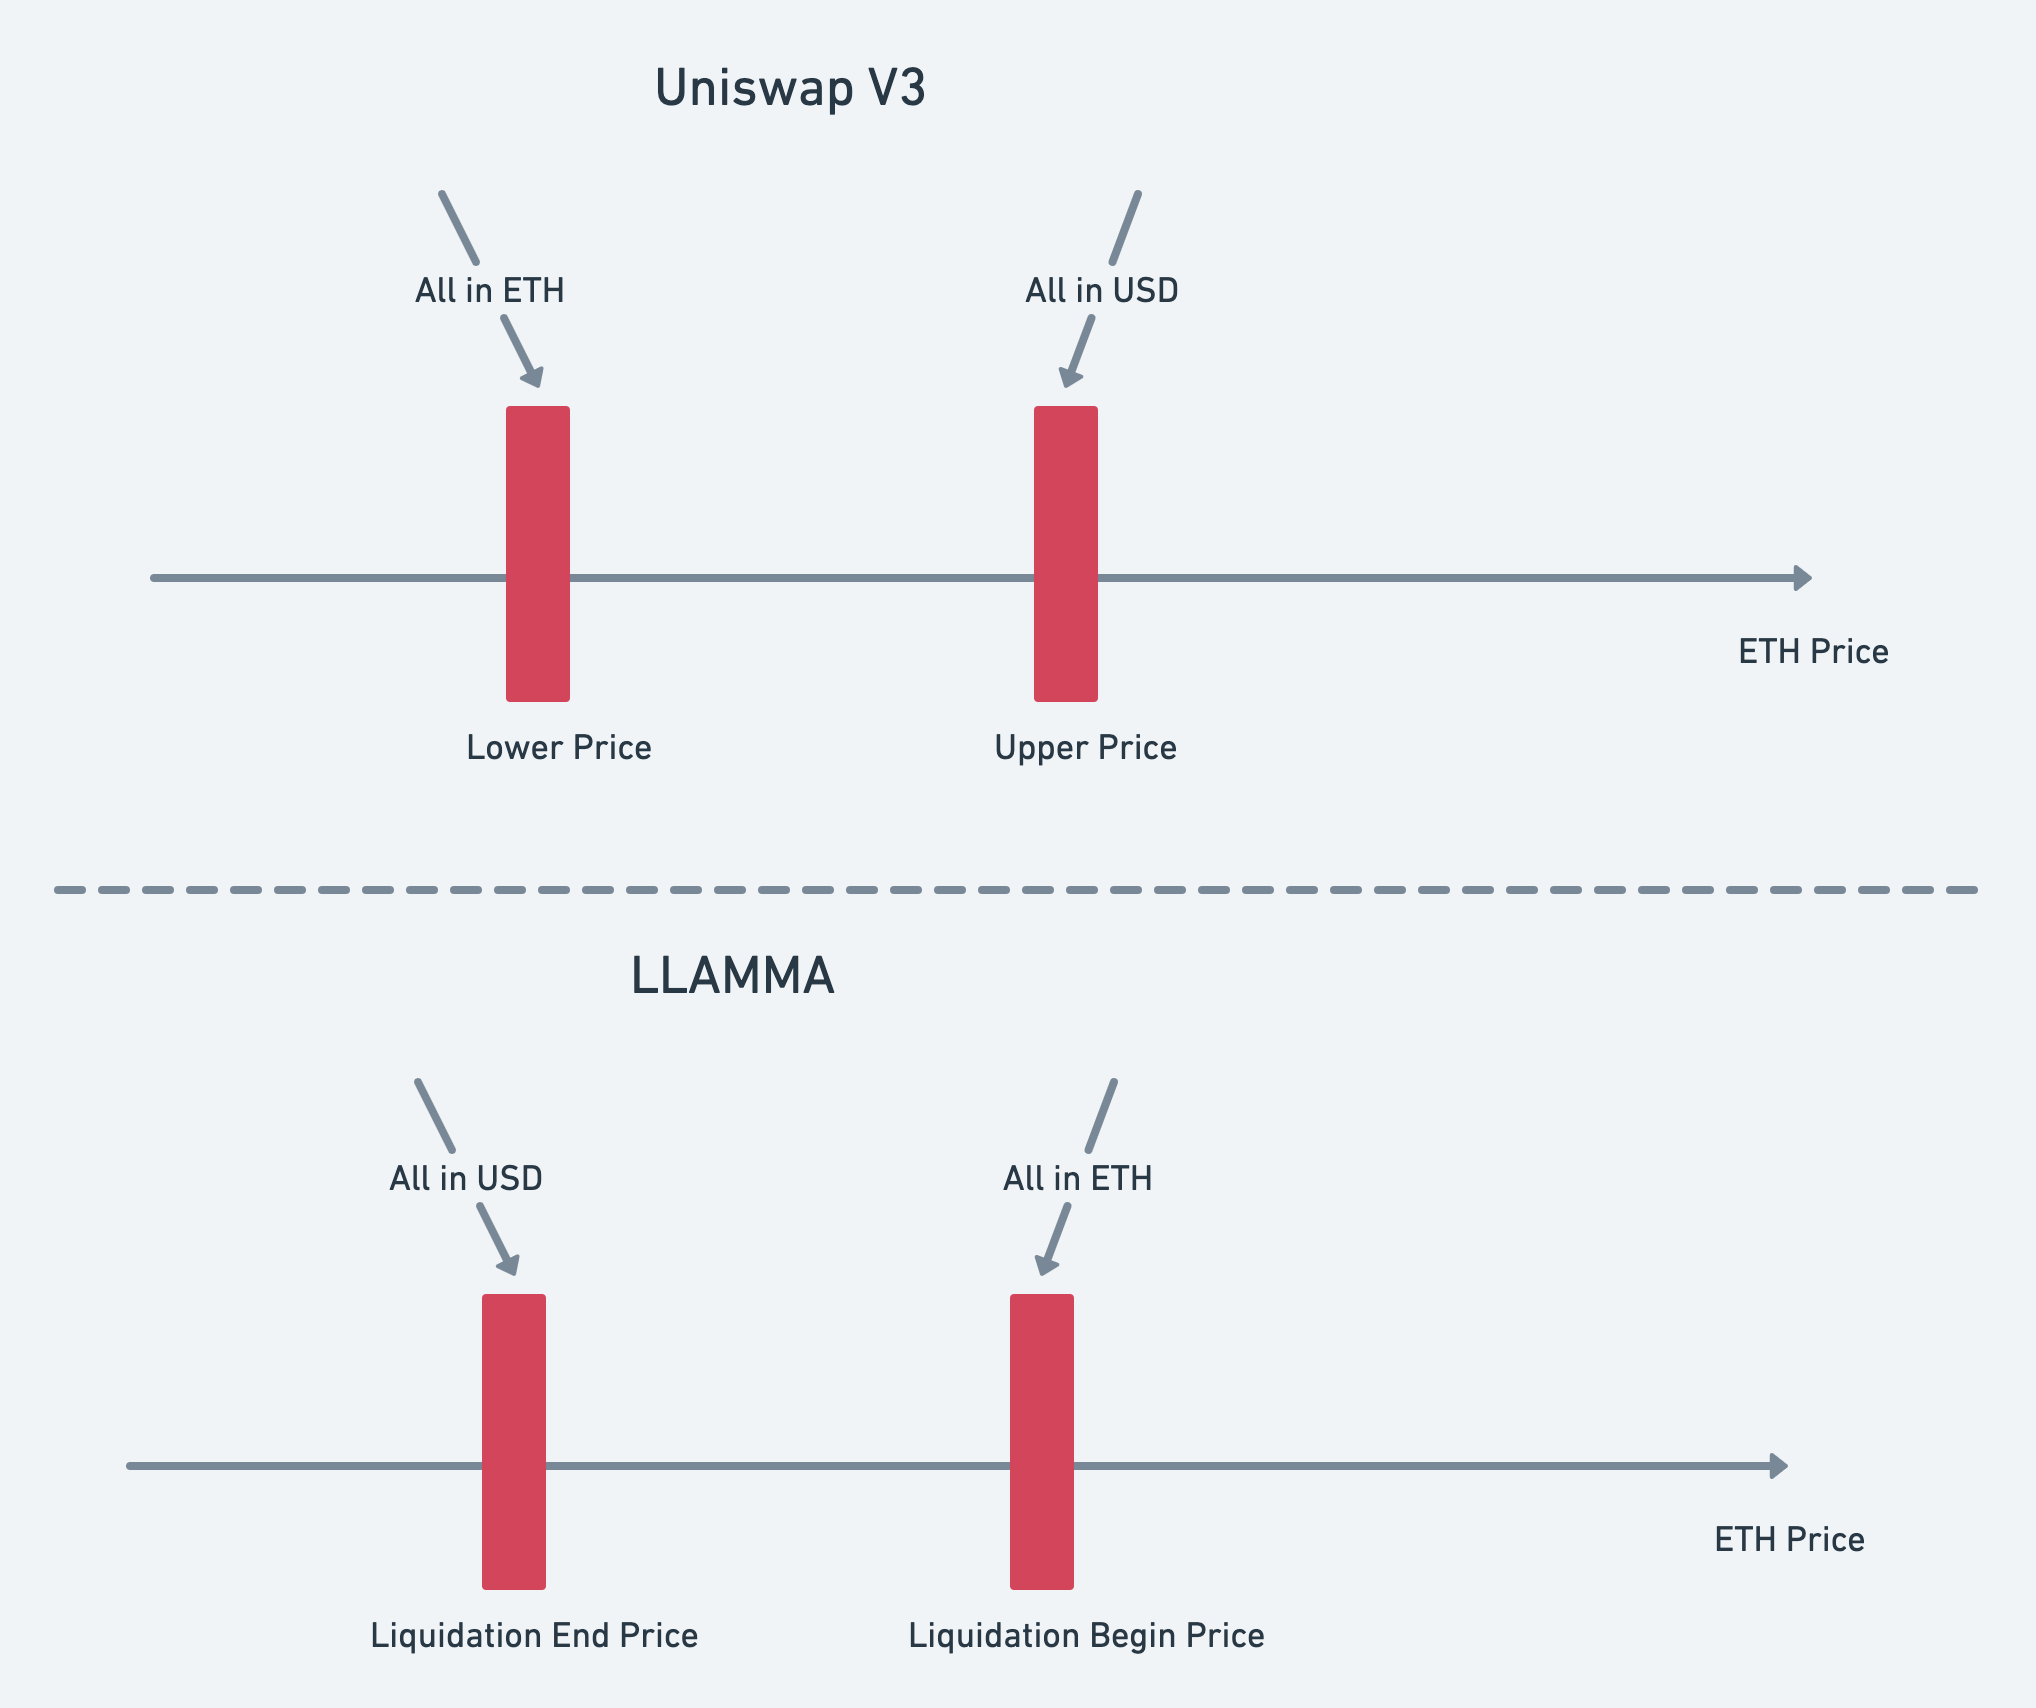 Difference between LLAMMA and Uniswap V3 scheme